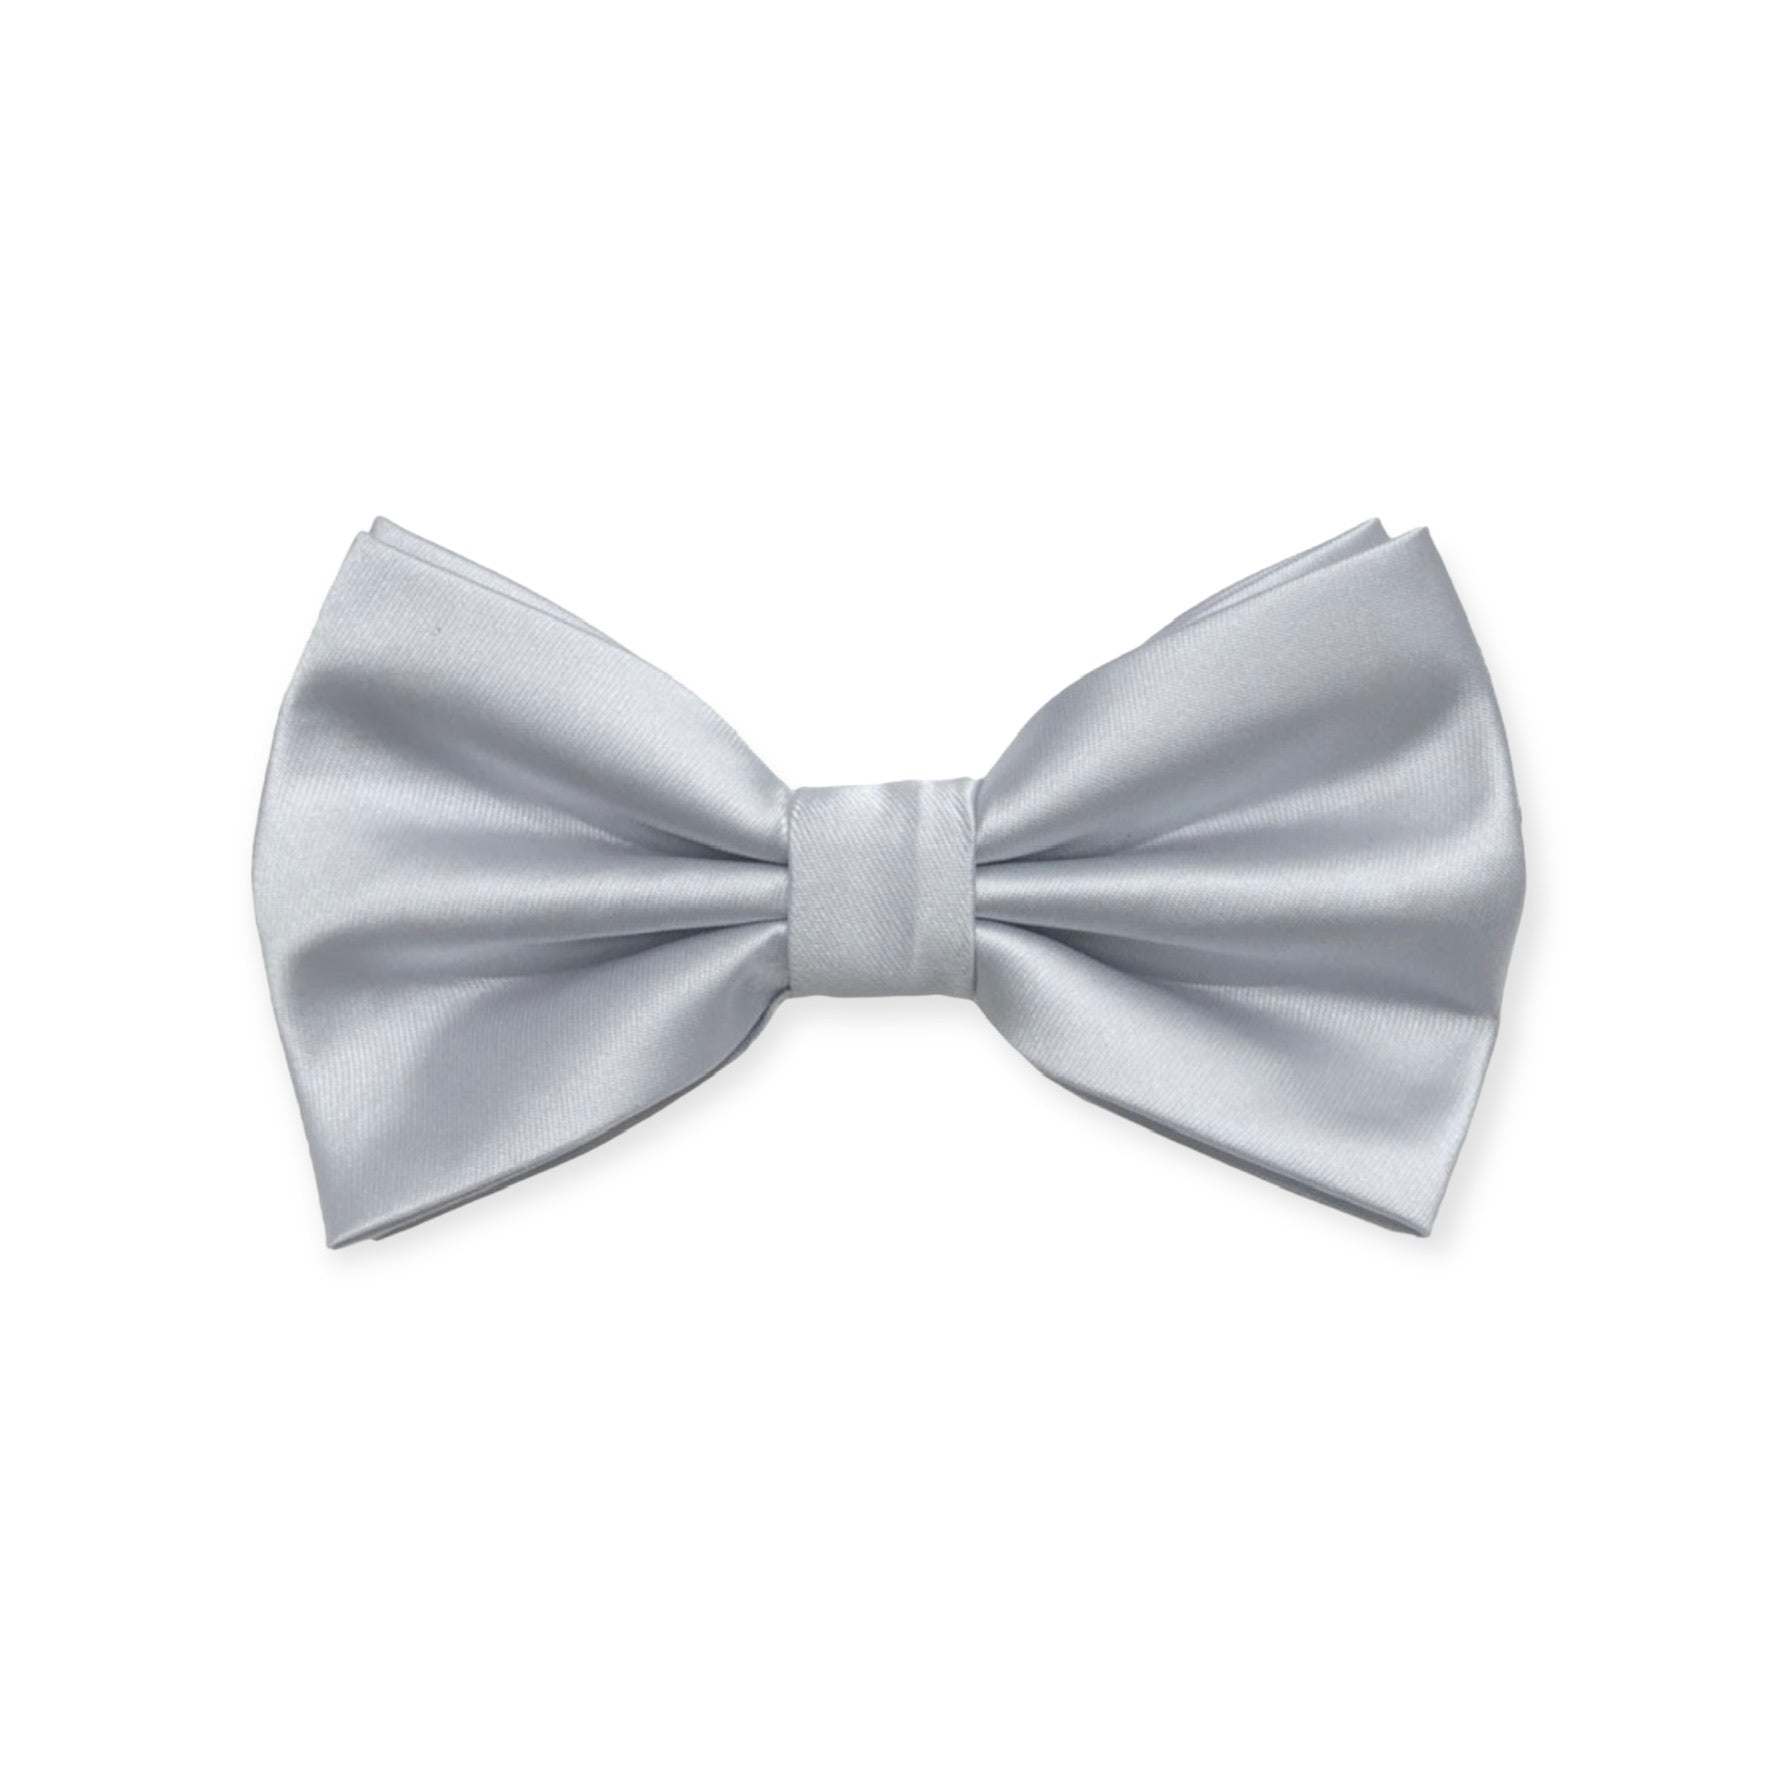 Solid Silver Bow Tie